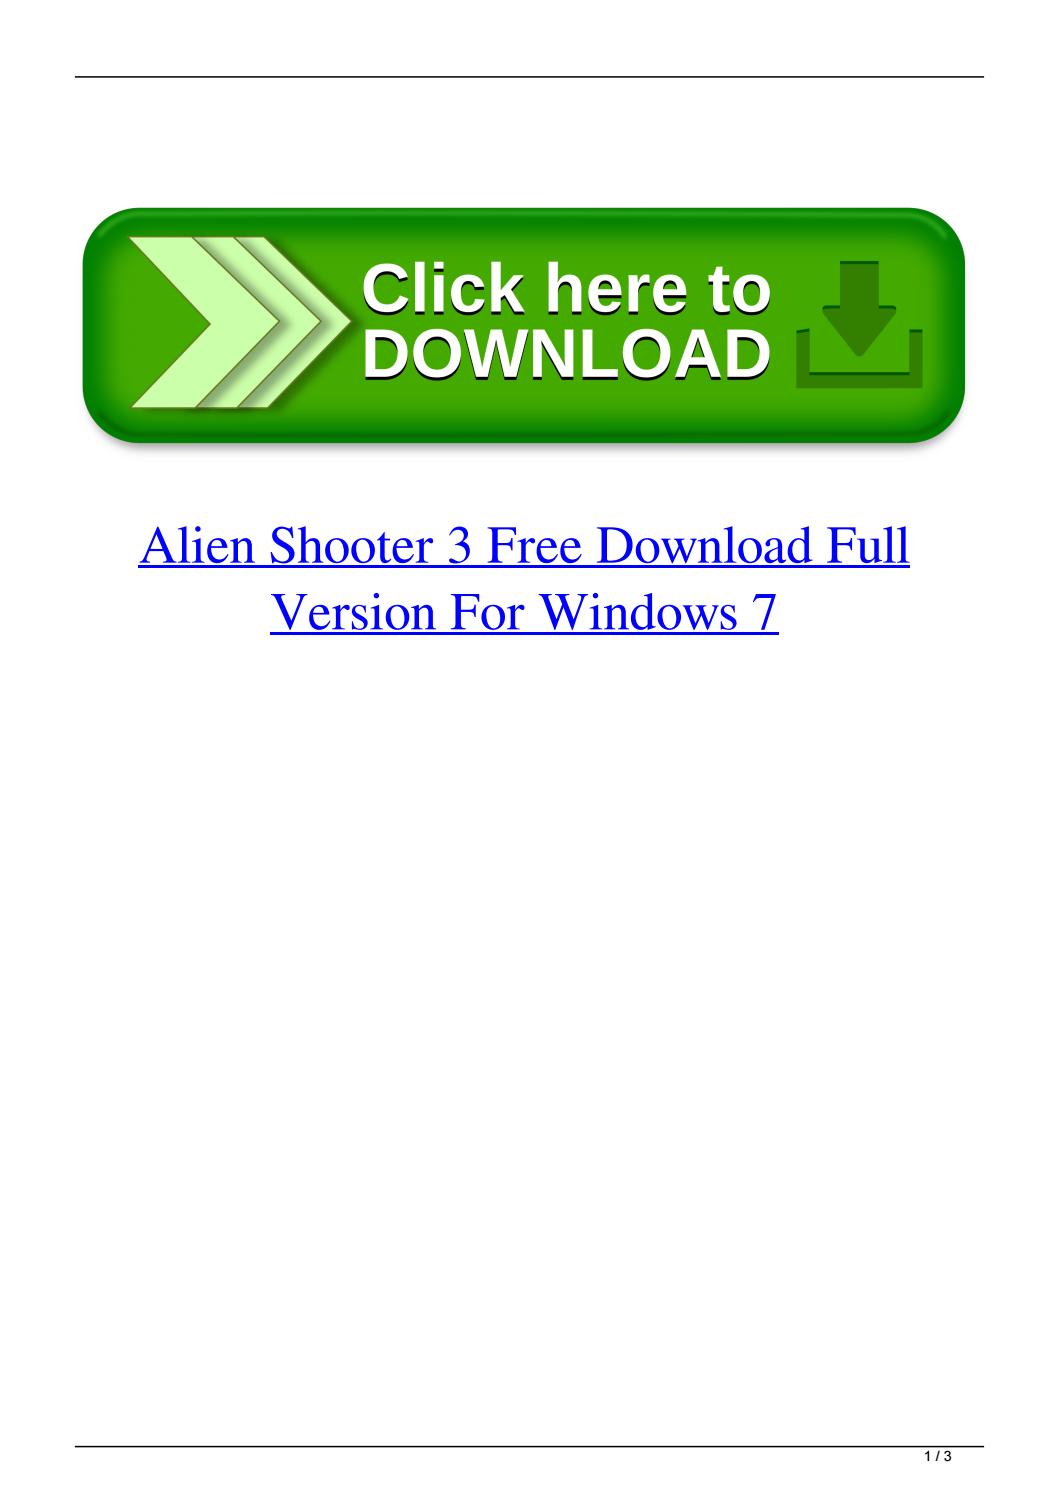 Alien shooter 3 download full version + crack